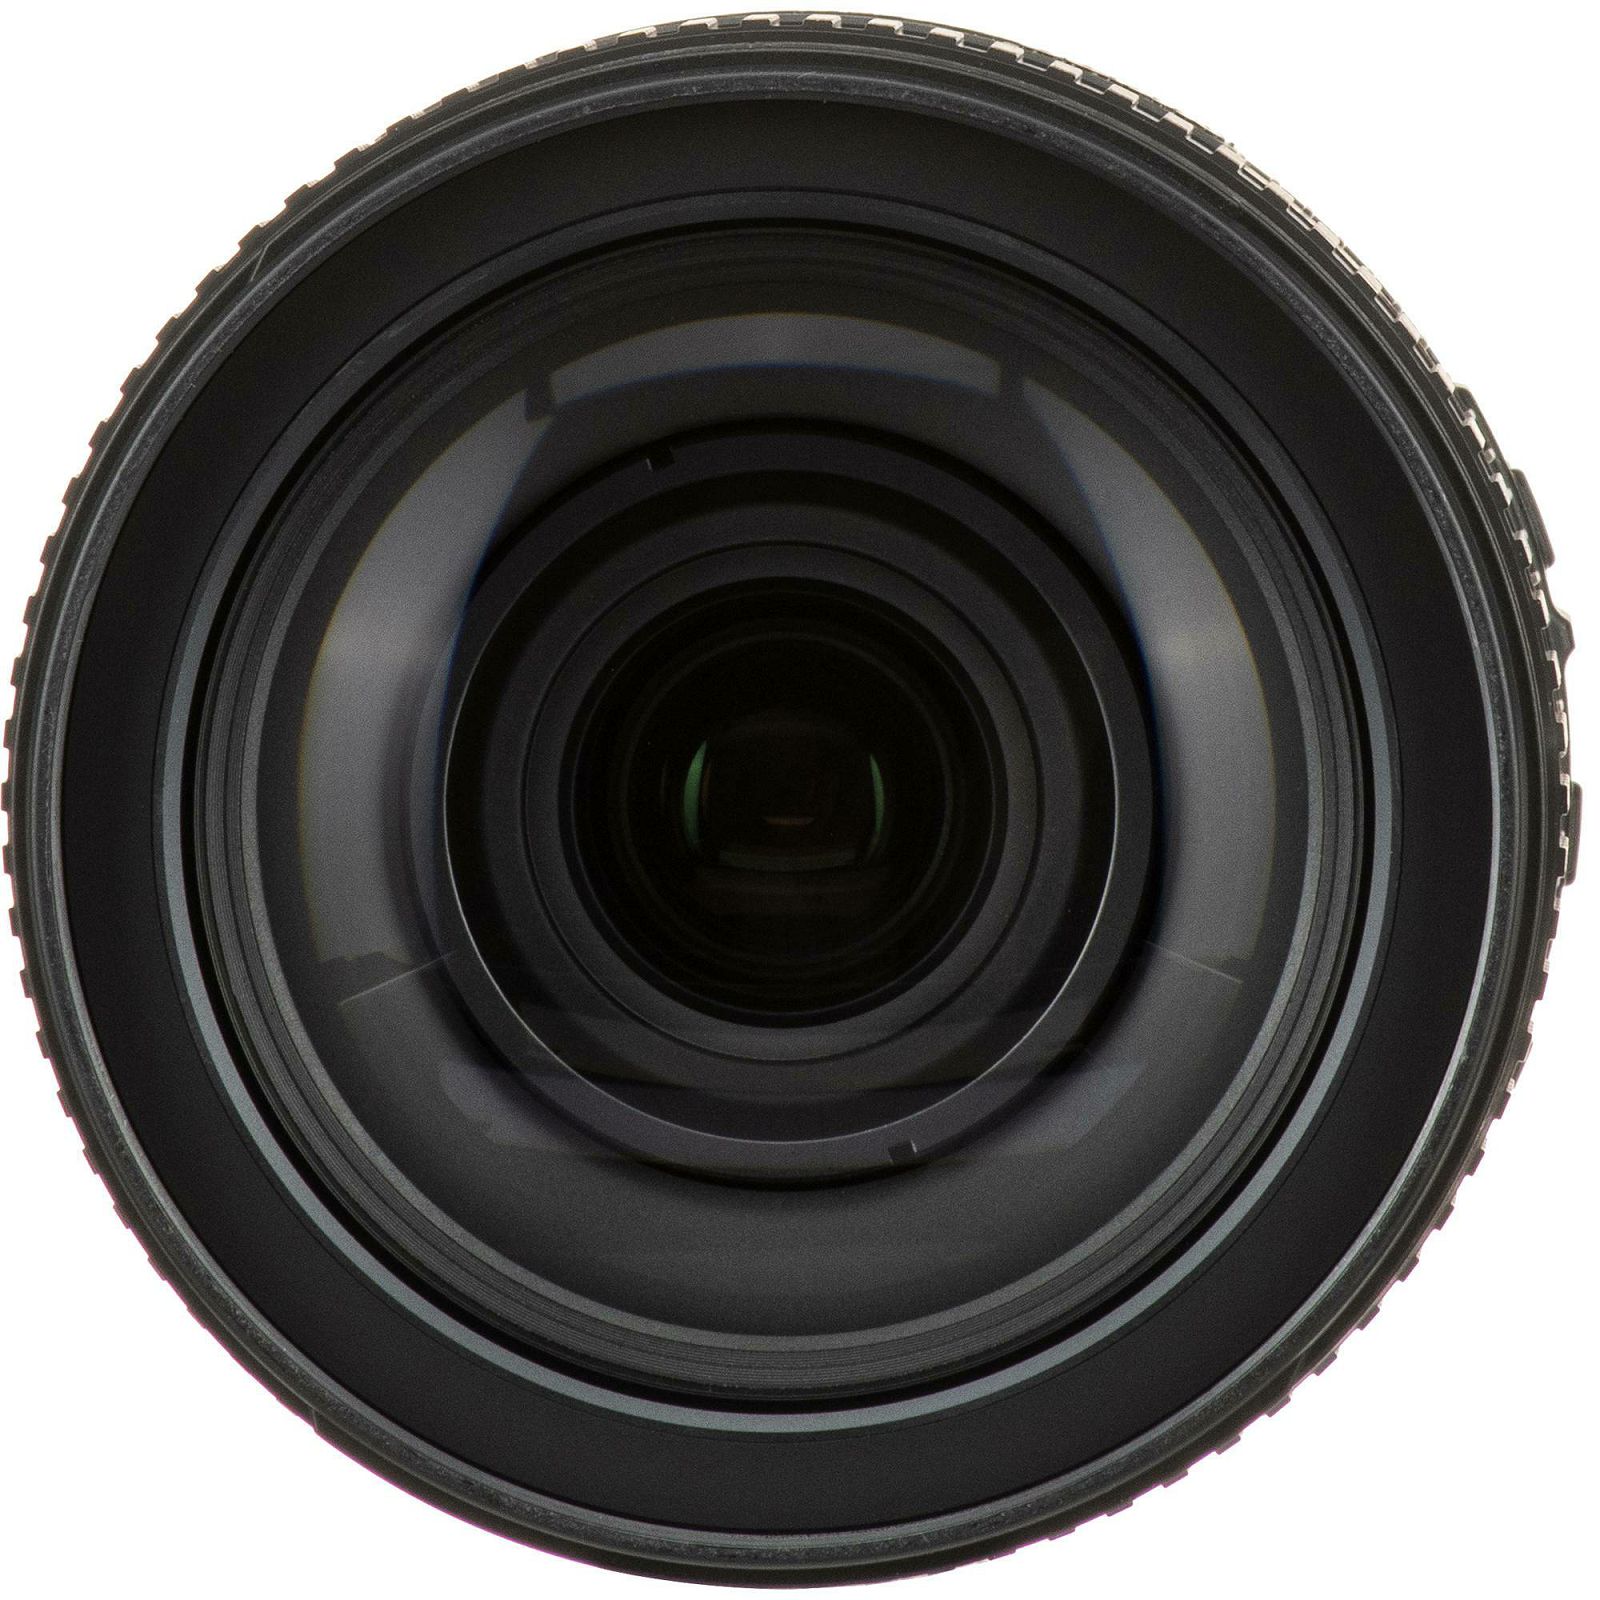 Nikon D780 + AF-S 24-120mm f/4G VR ED DSLR Digitalni fotoaparat i objektiv 24-120 F4.0 (VBA560K001)